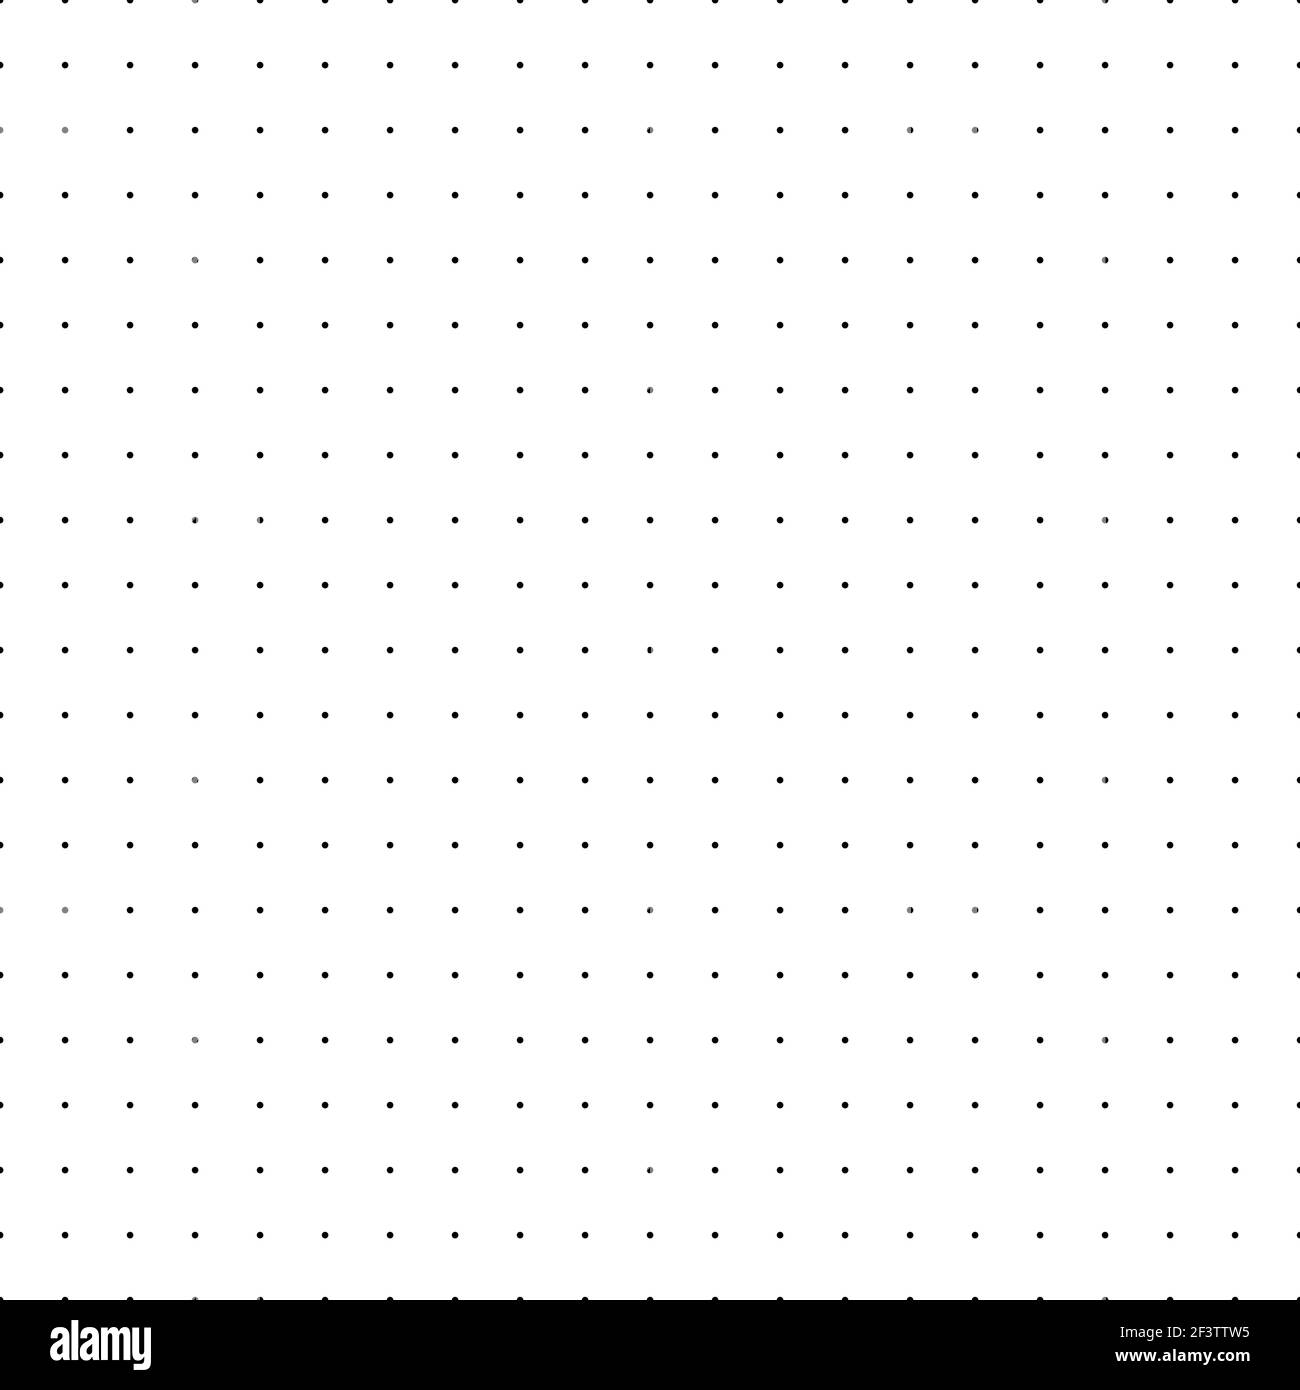 Bullet journal Imágenes de stock en blanco y negro - Alamy